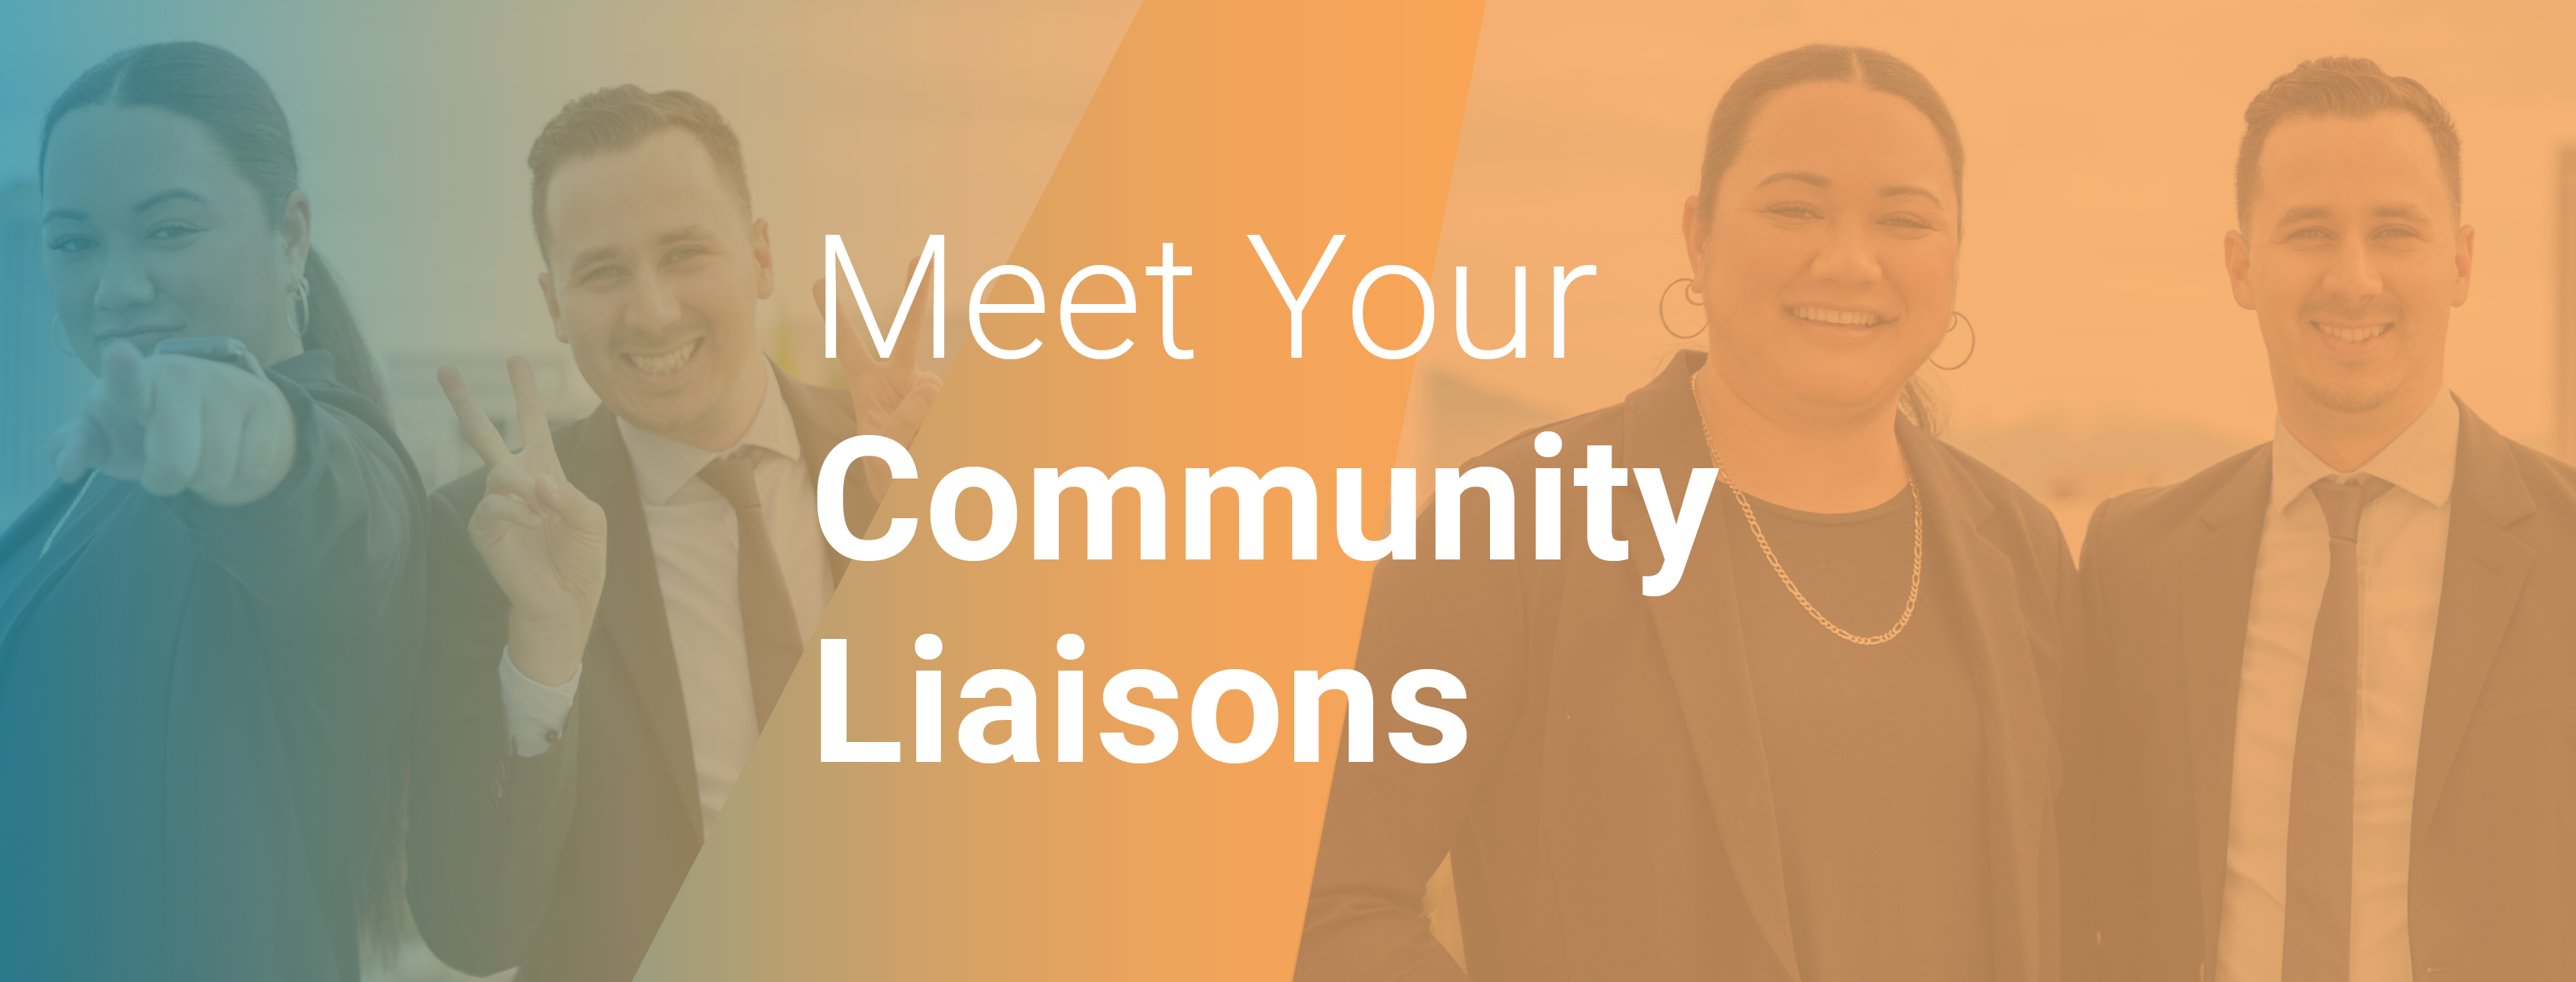 Meet Your Community Liaisons